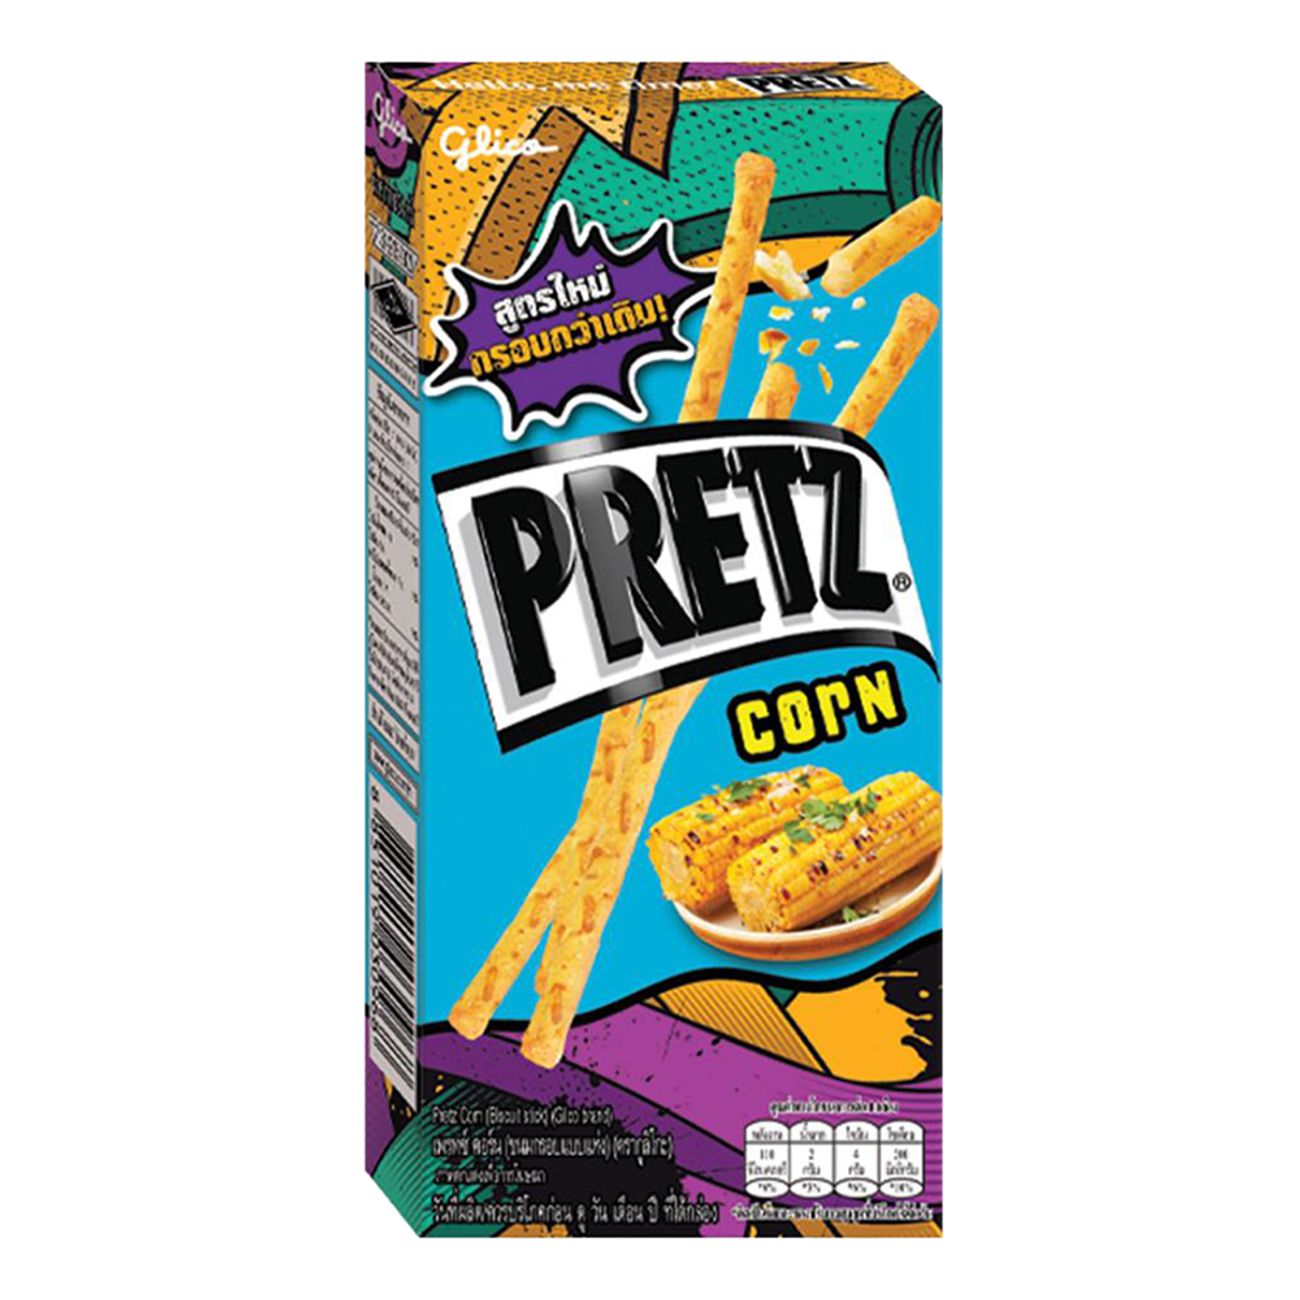 pretz-corn-99857-1